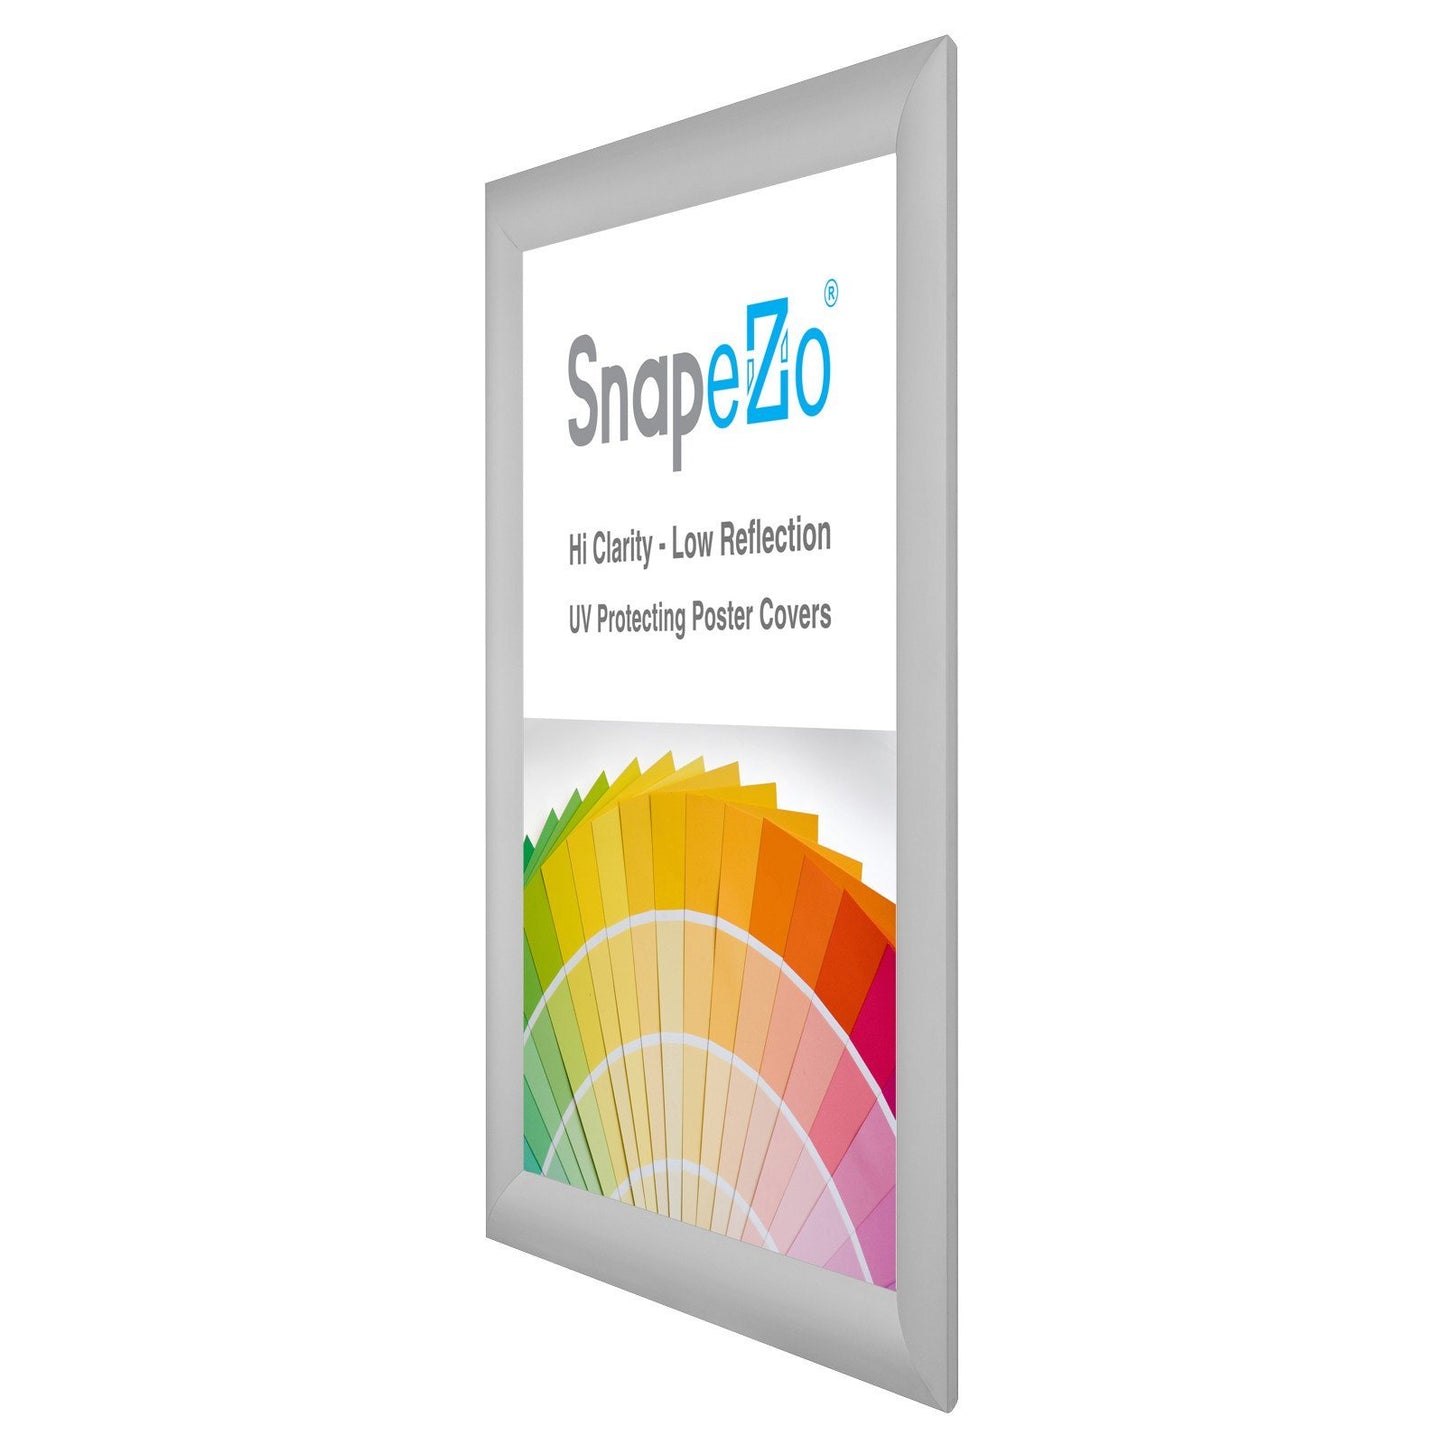 36x48 Silver SnapeZo® Snap Frame - 2.2" Profile